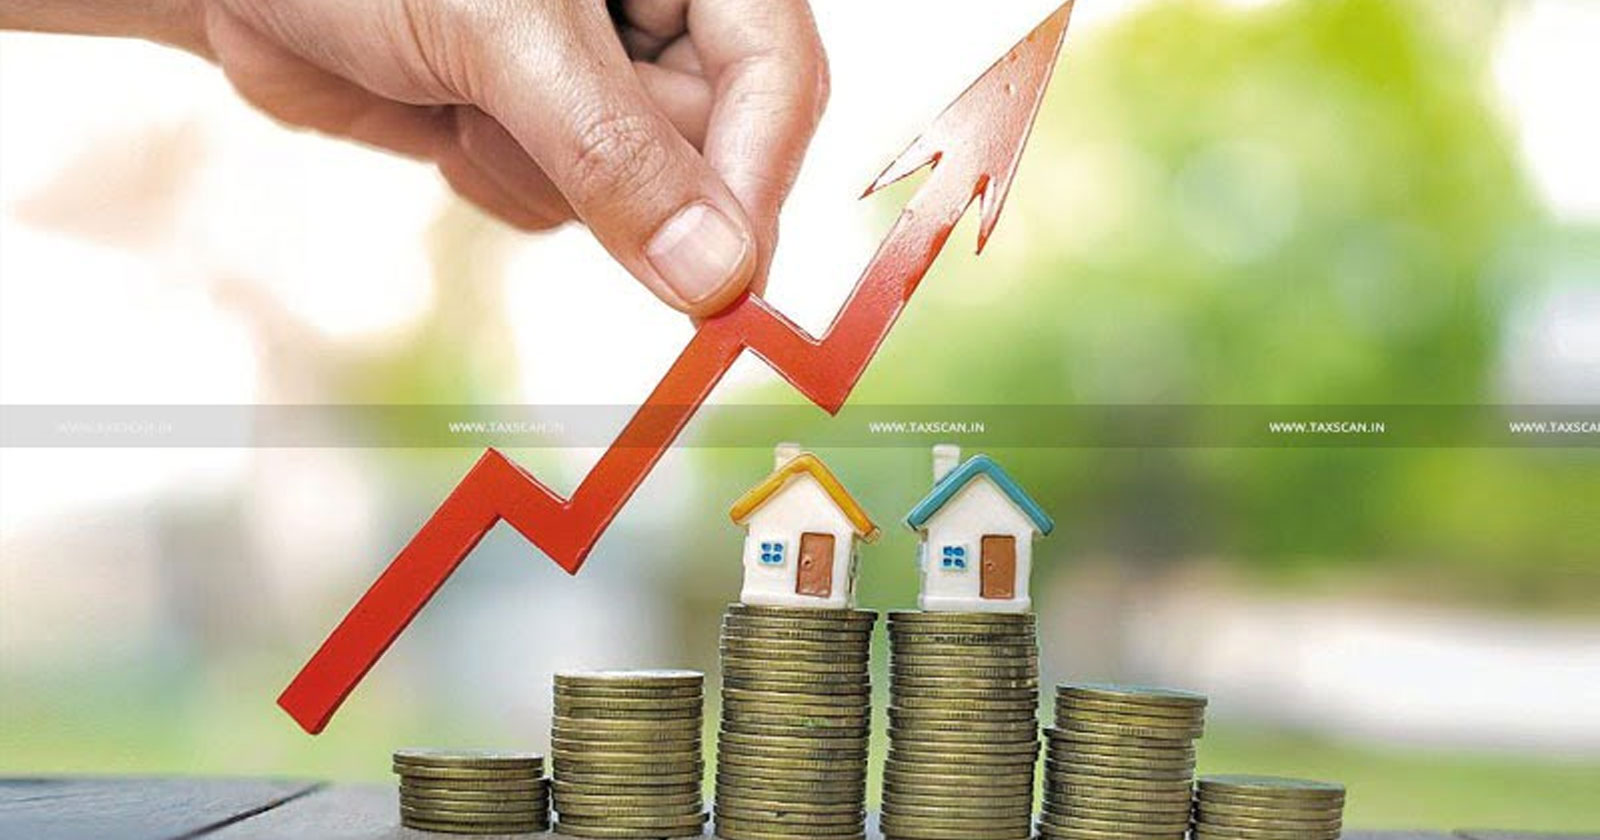 ITAT Pune - Corporate entity - property improvement expenditure - taxscan